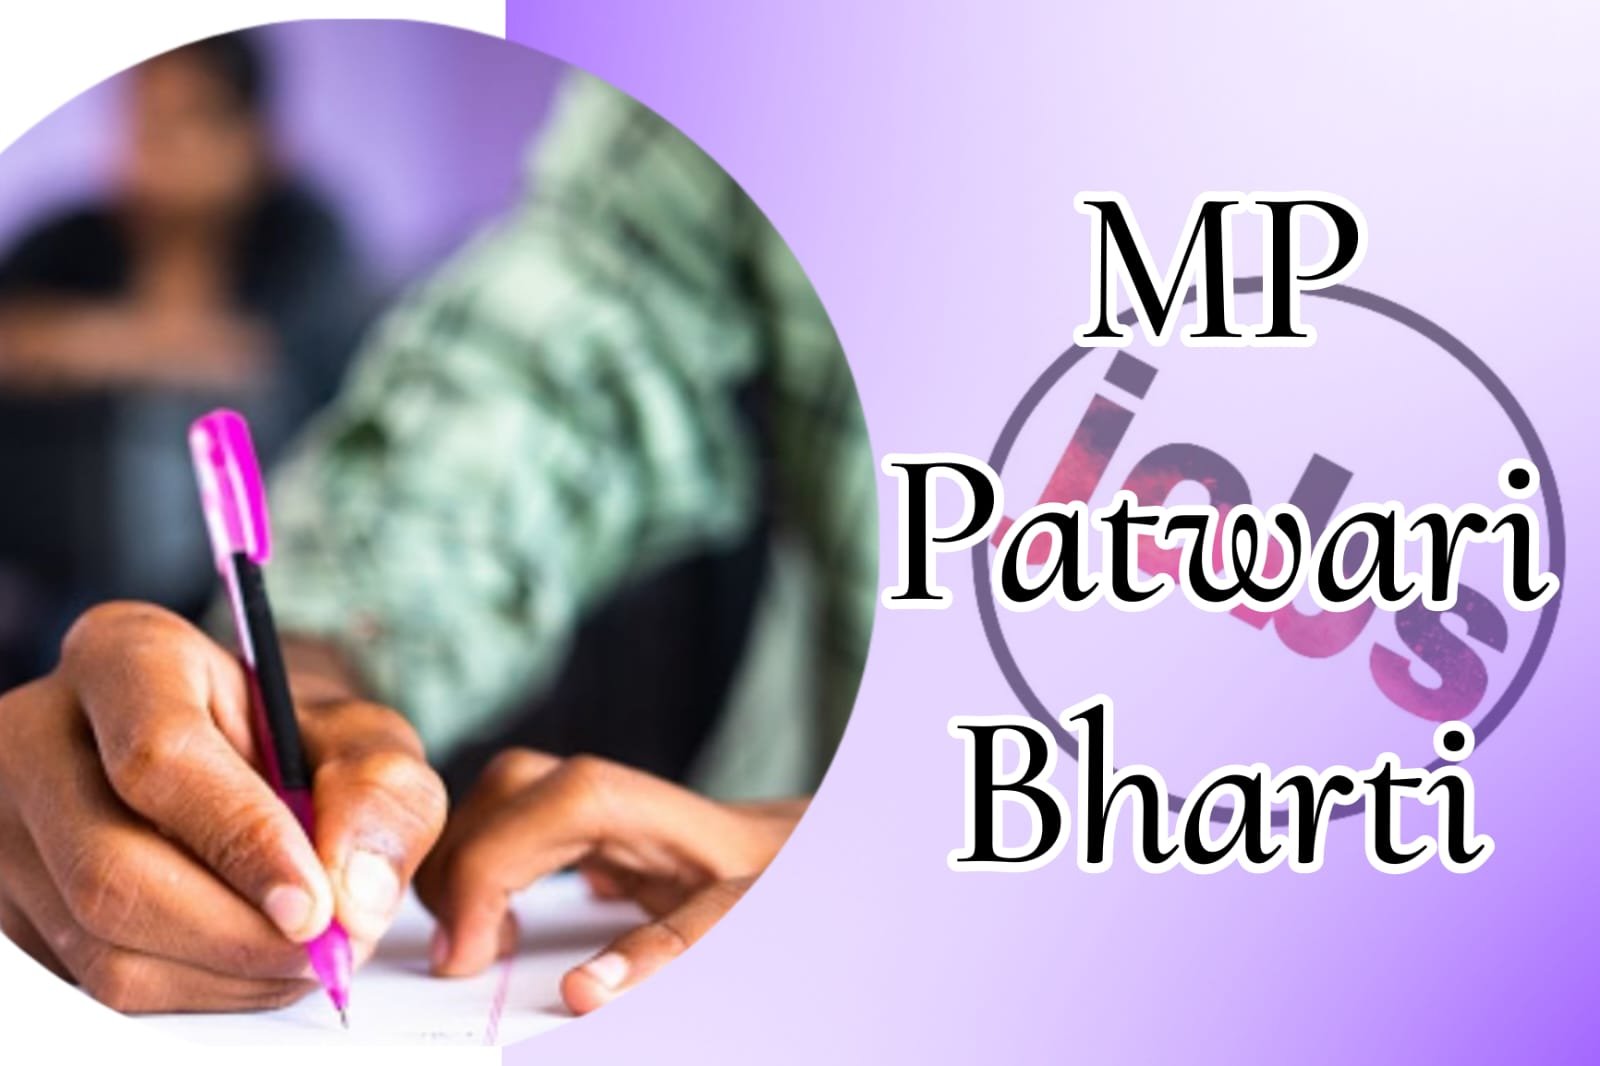 MP Patwari Bharti - Government gives clean chit to Patwari exam